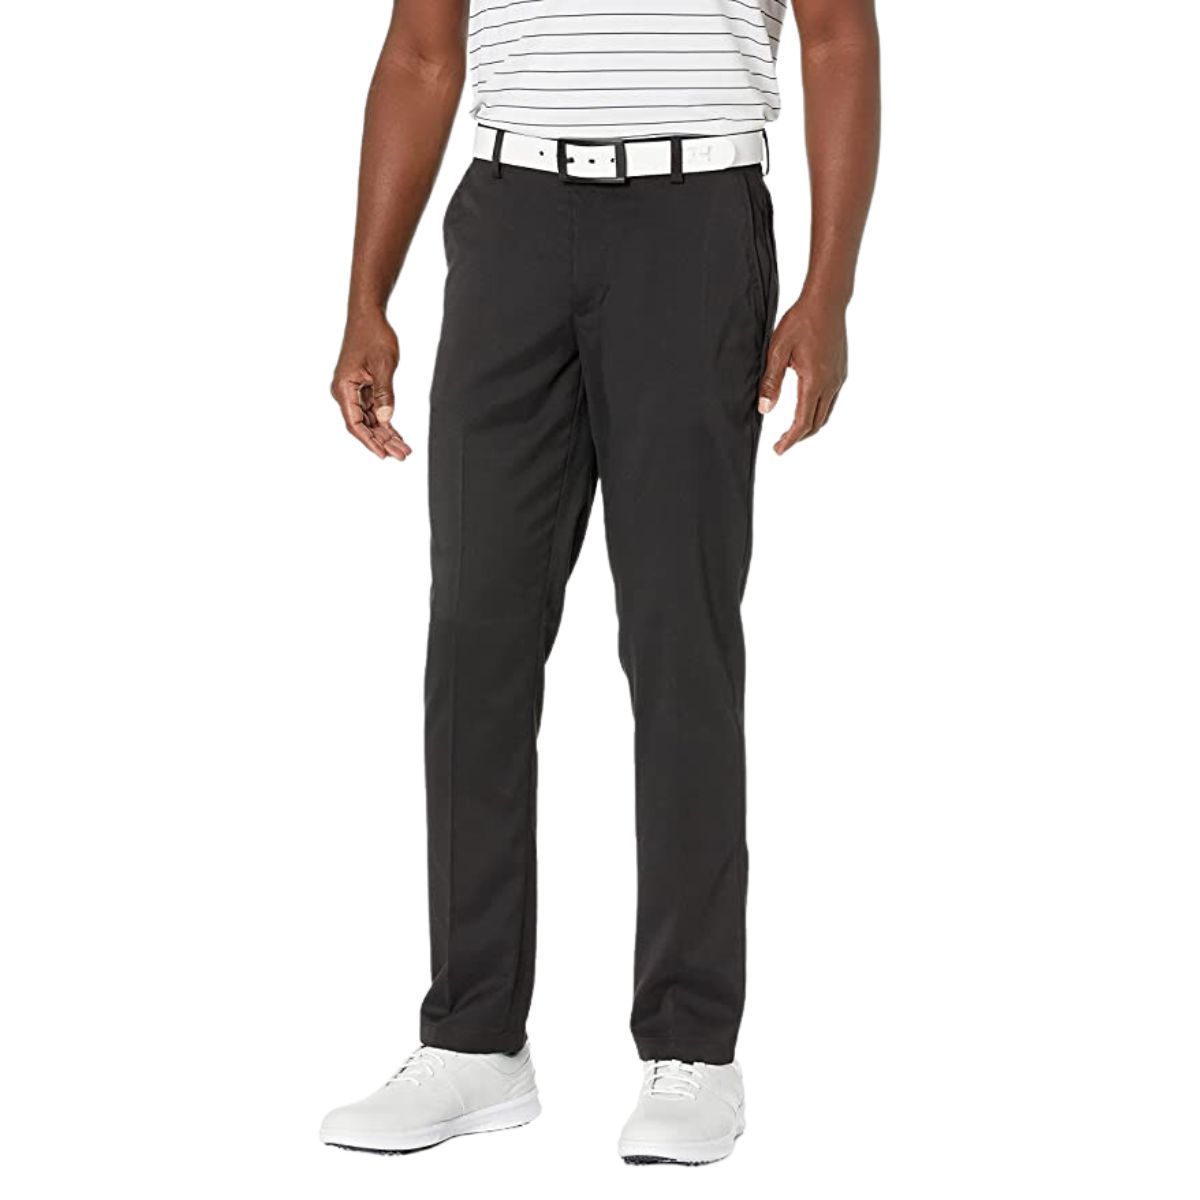 BONOBOS GOLF Mens 34x28 Slim White Performance Stretch Golf Pants | eBay